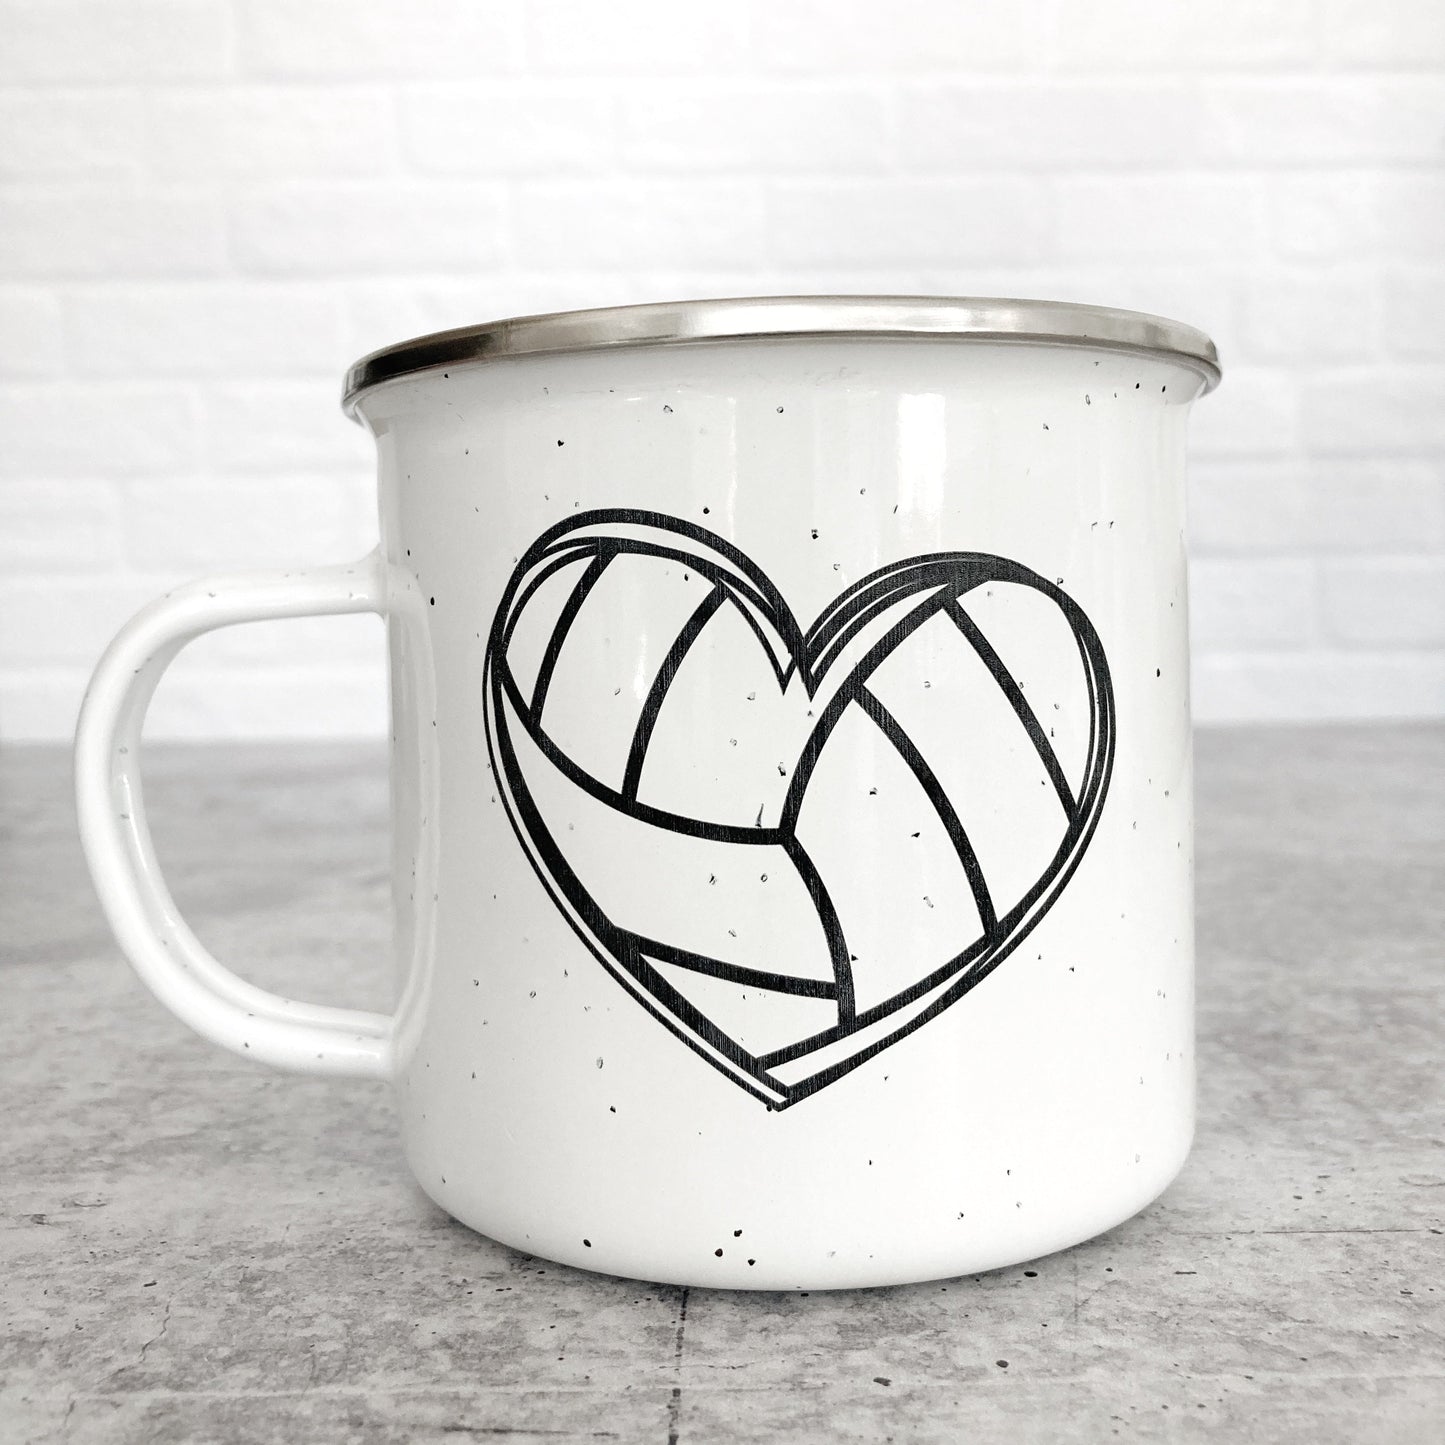 Volleyball heart design on a white enamel mug